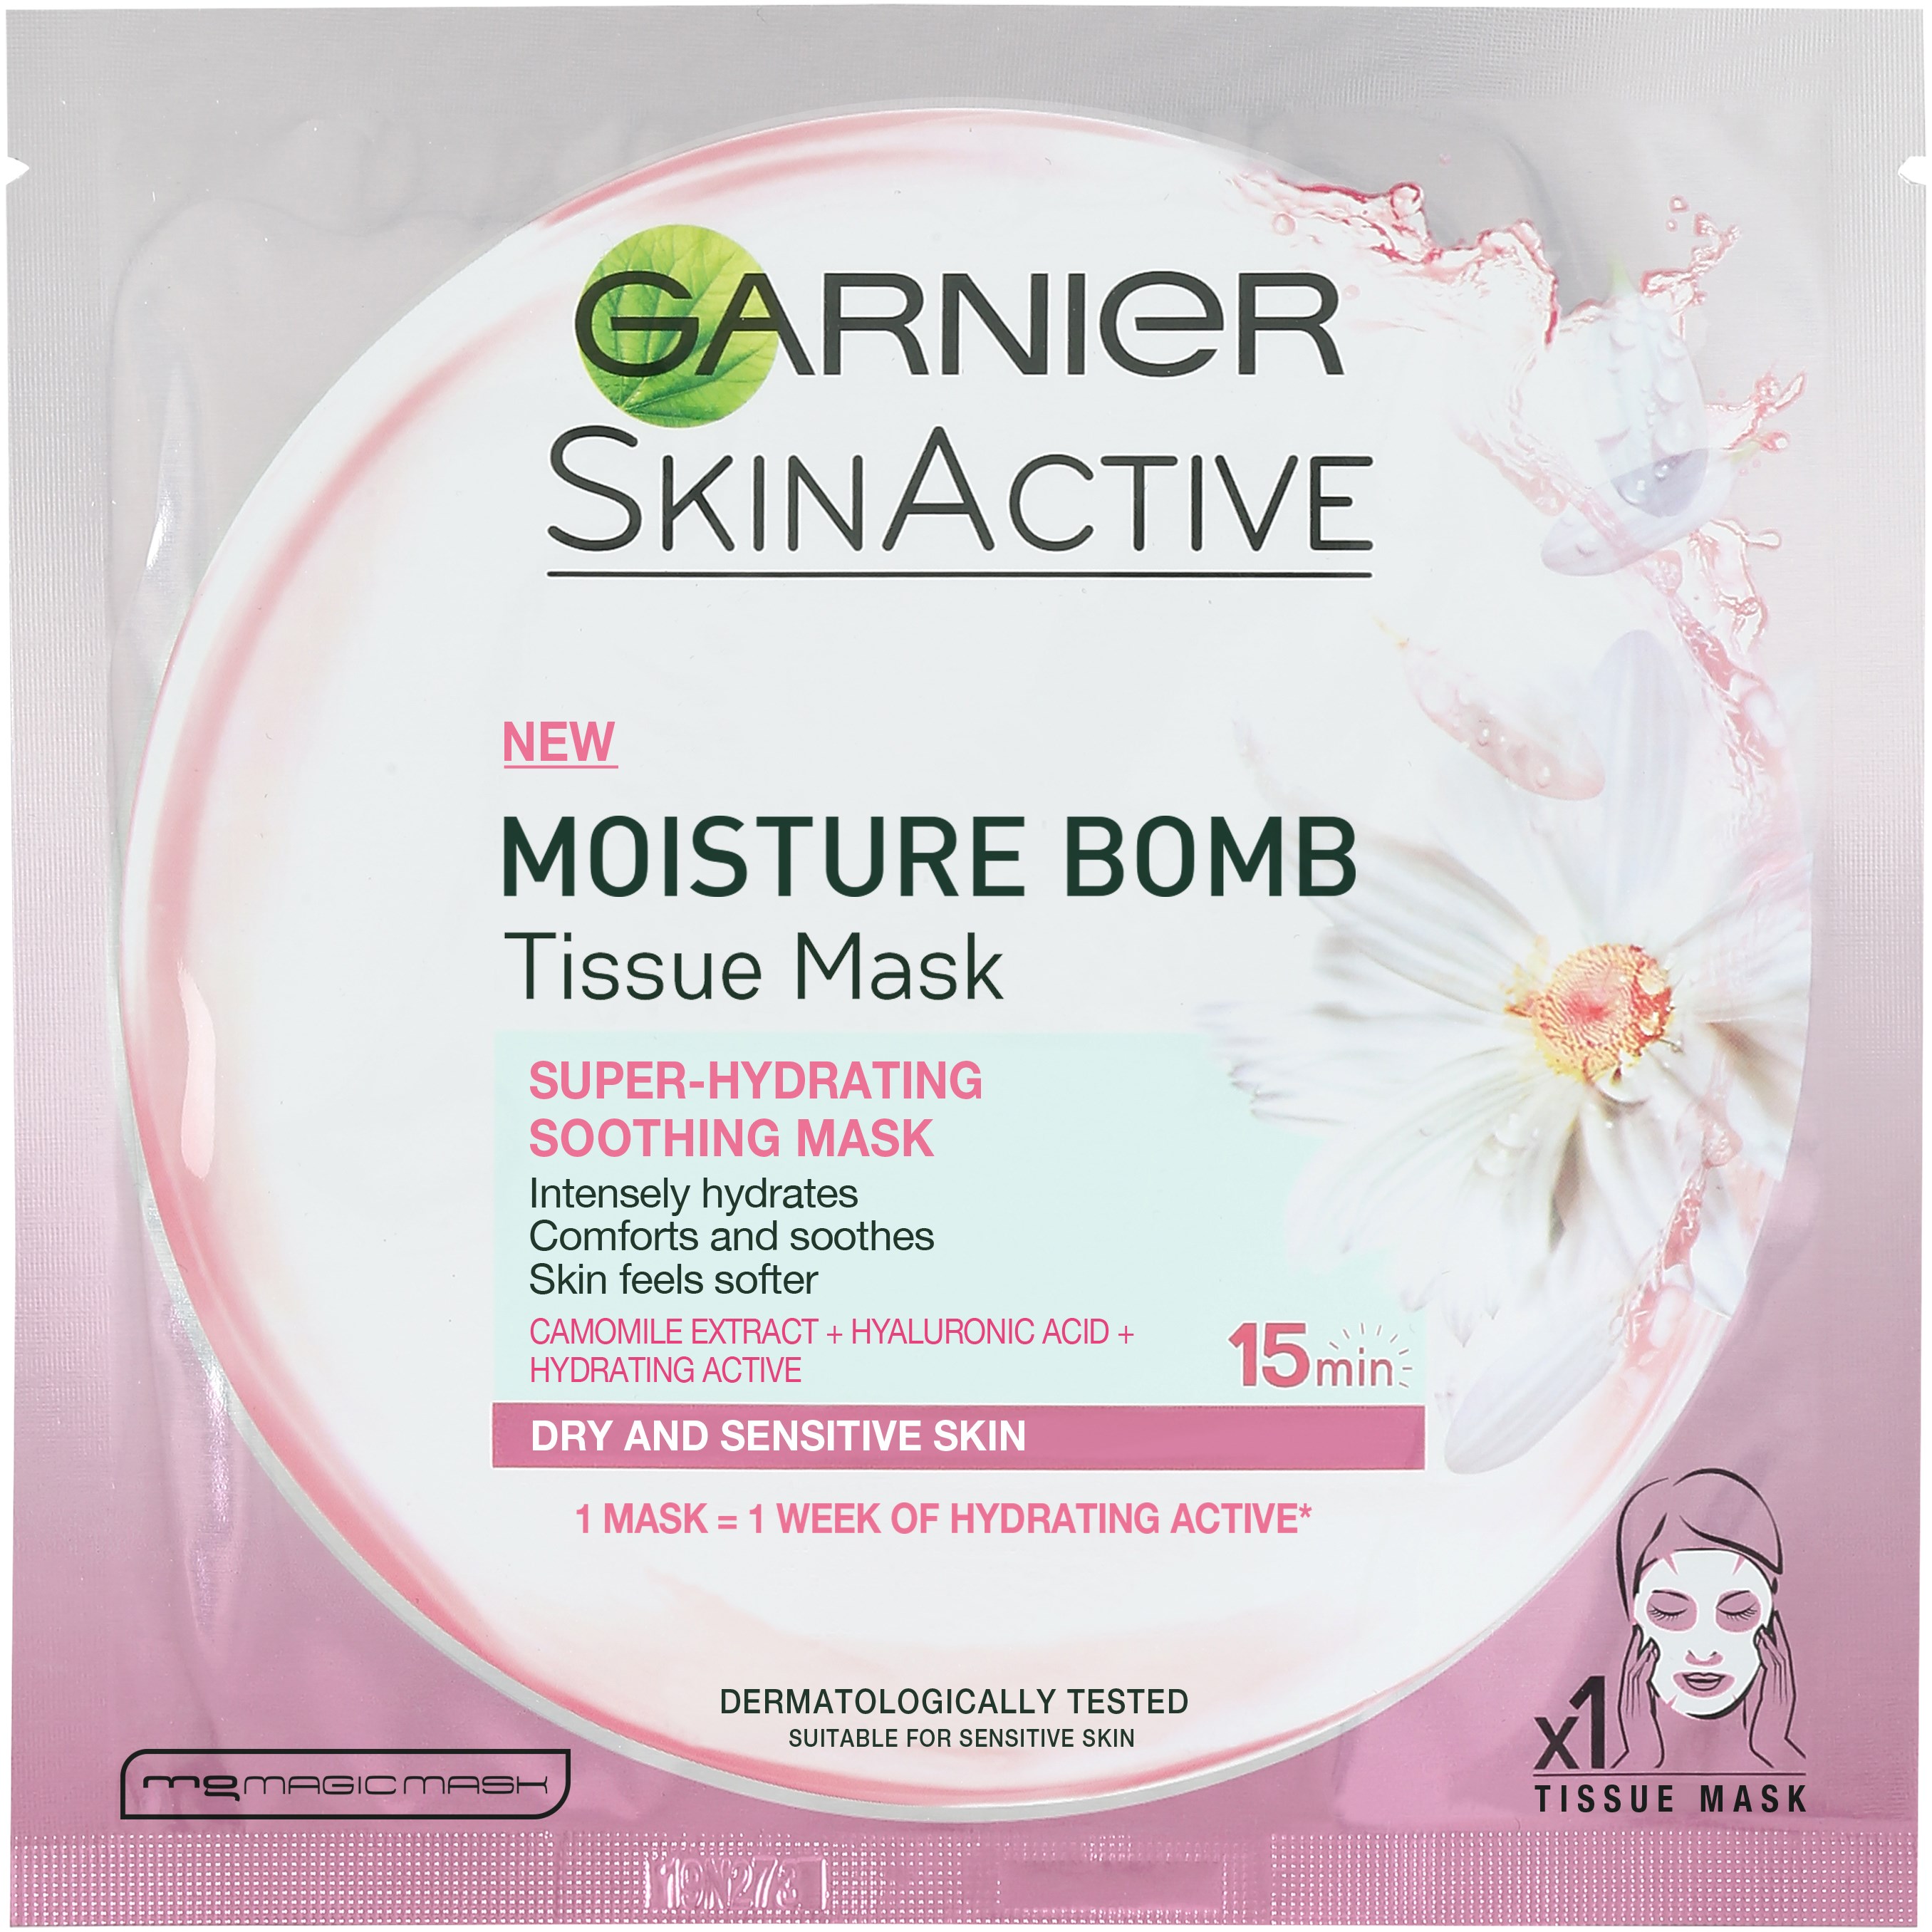 Garnier SkinActive Moisture Bomb Tissue Mask